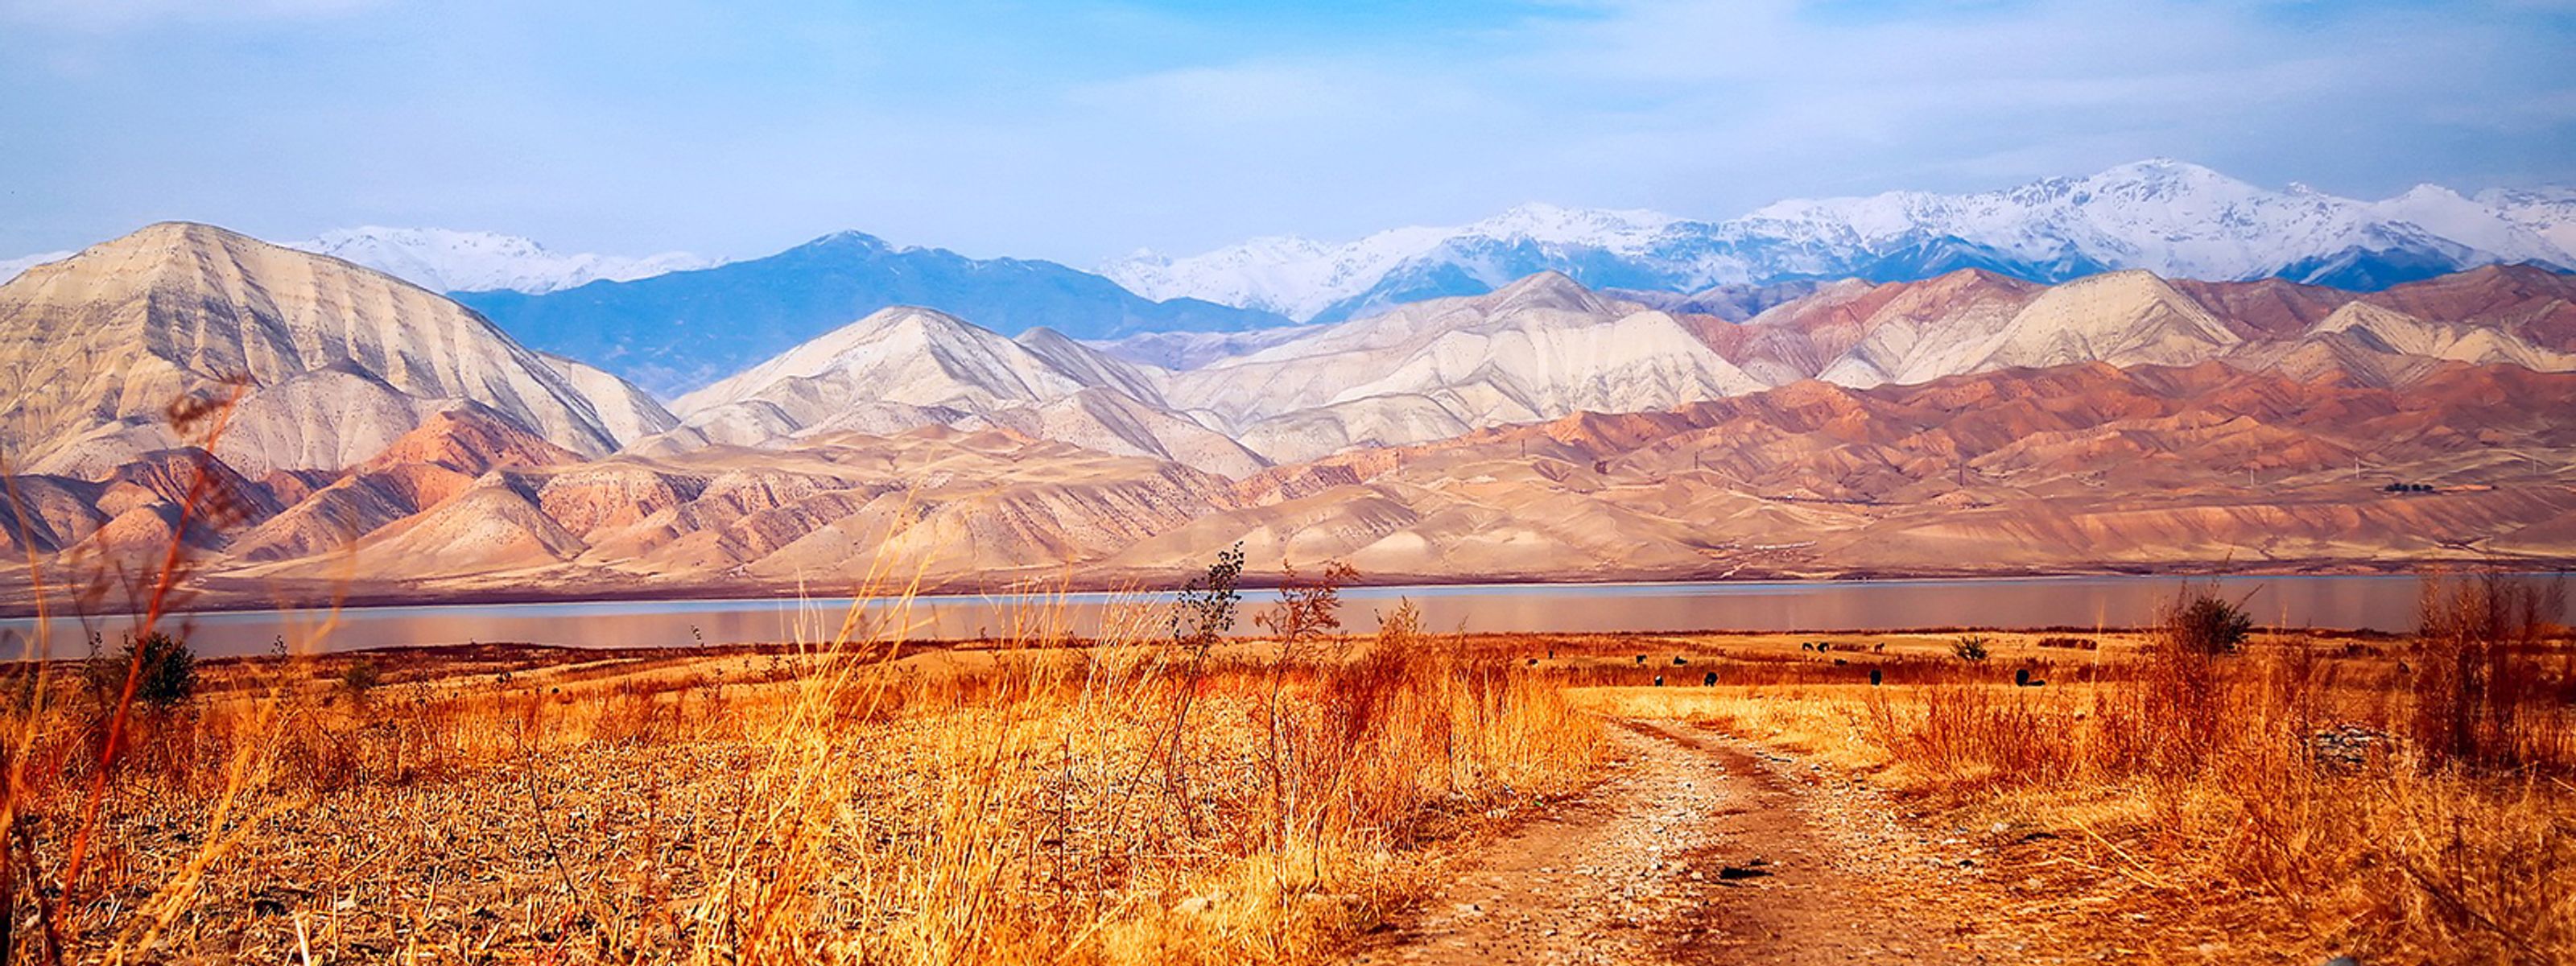 Kirgistans farbenfrohe Weiten 